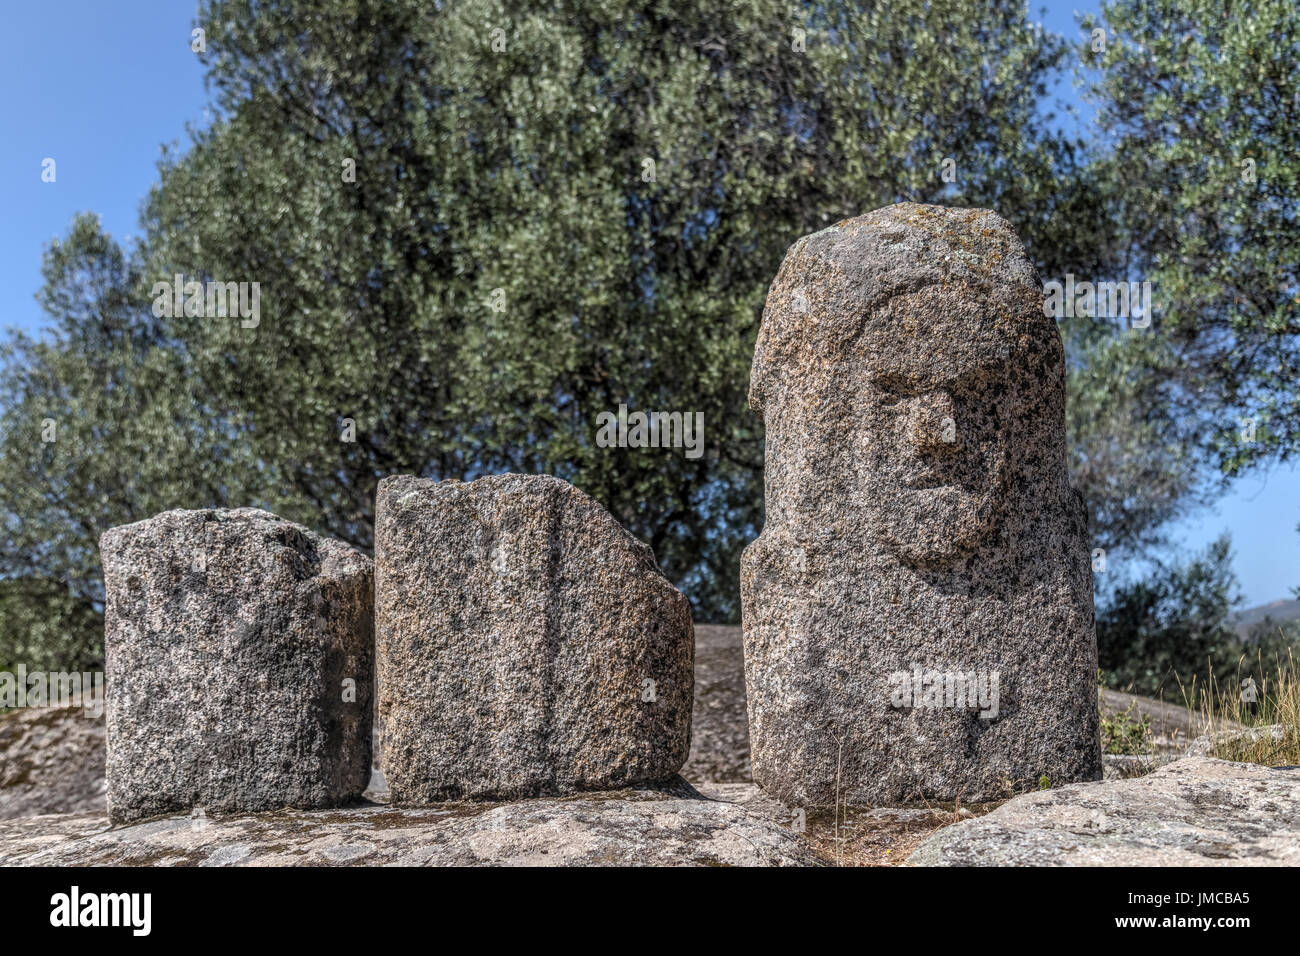 Filitosa, menhirs, Corse, France Banque D'Images